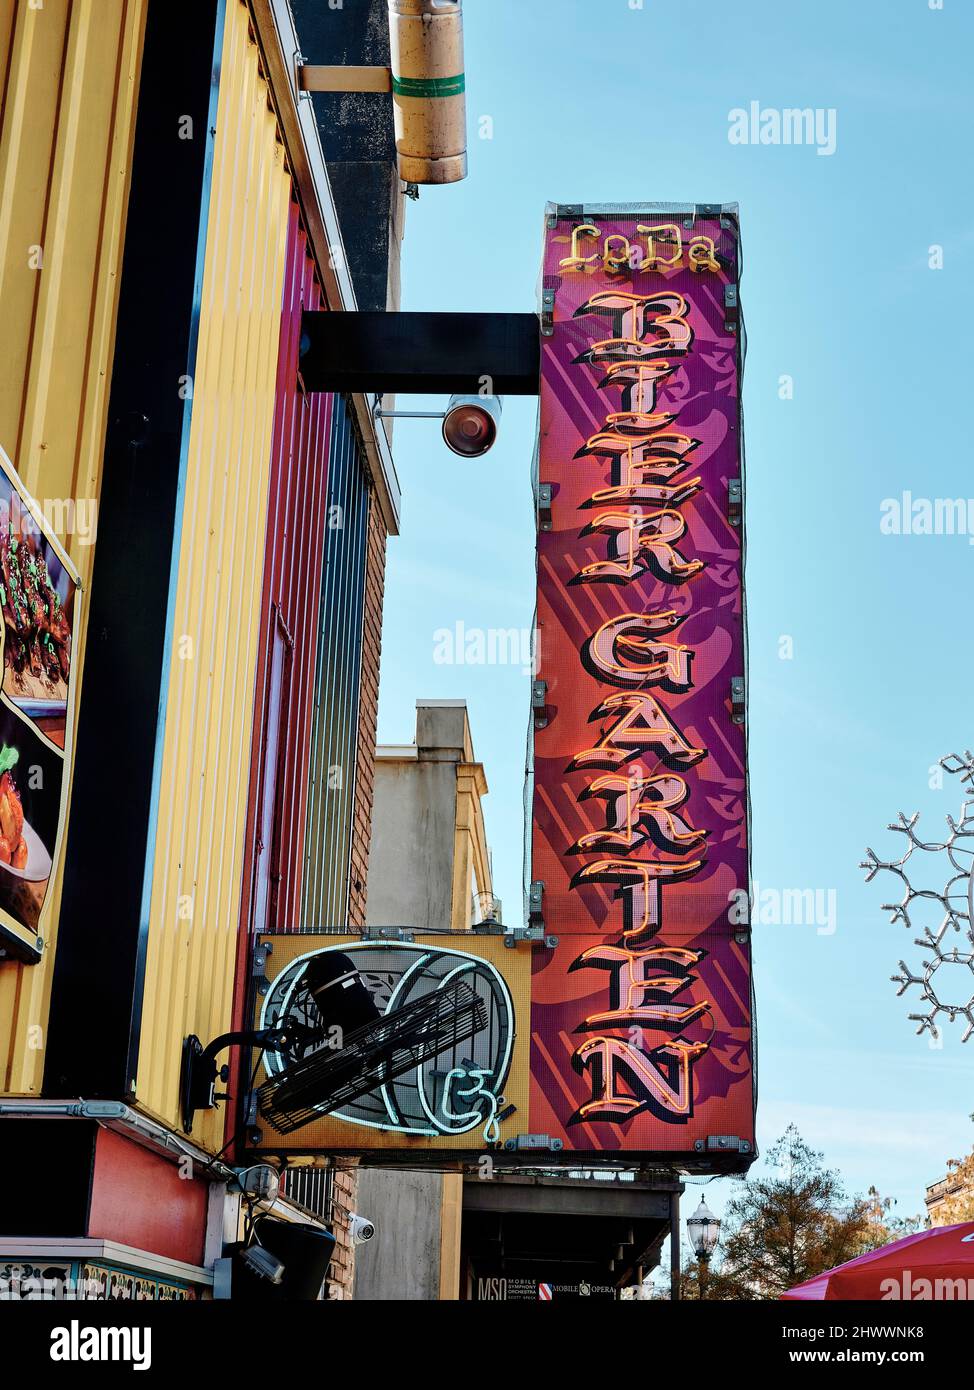 Tall neon sign for the Bier Garten bar or tavern in Mobile Alabama, USA. Stock Photo